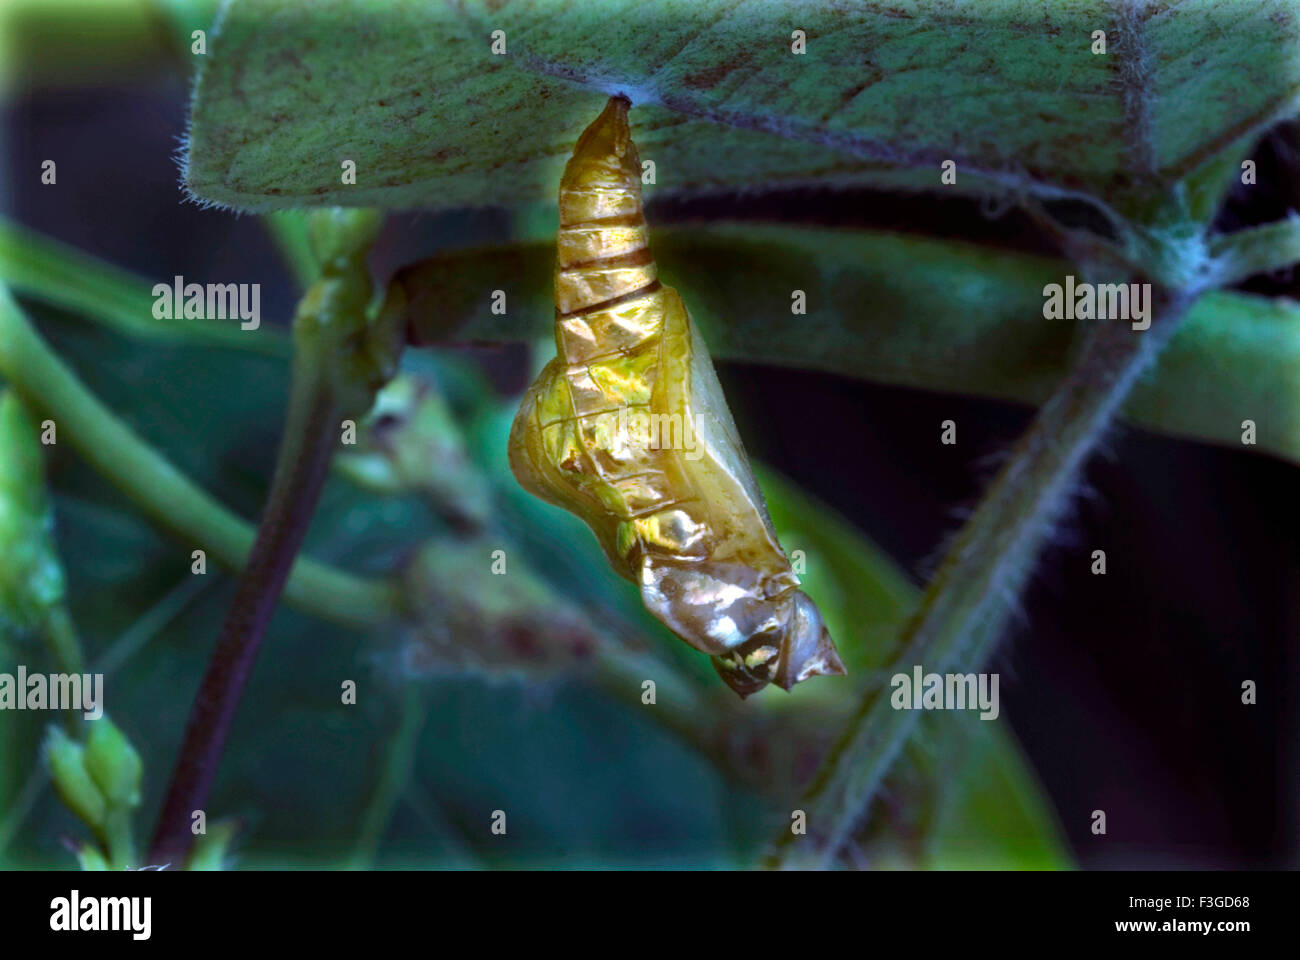 Golden pupa de Lepidoptera técnica de supervivencia Foto de stock